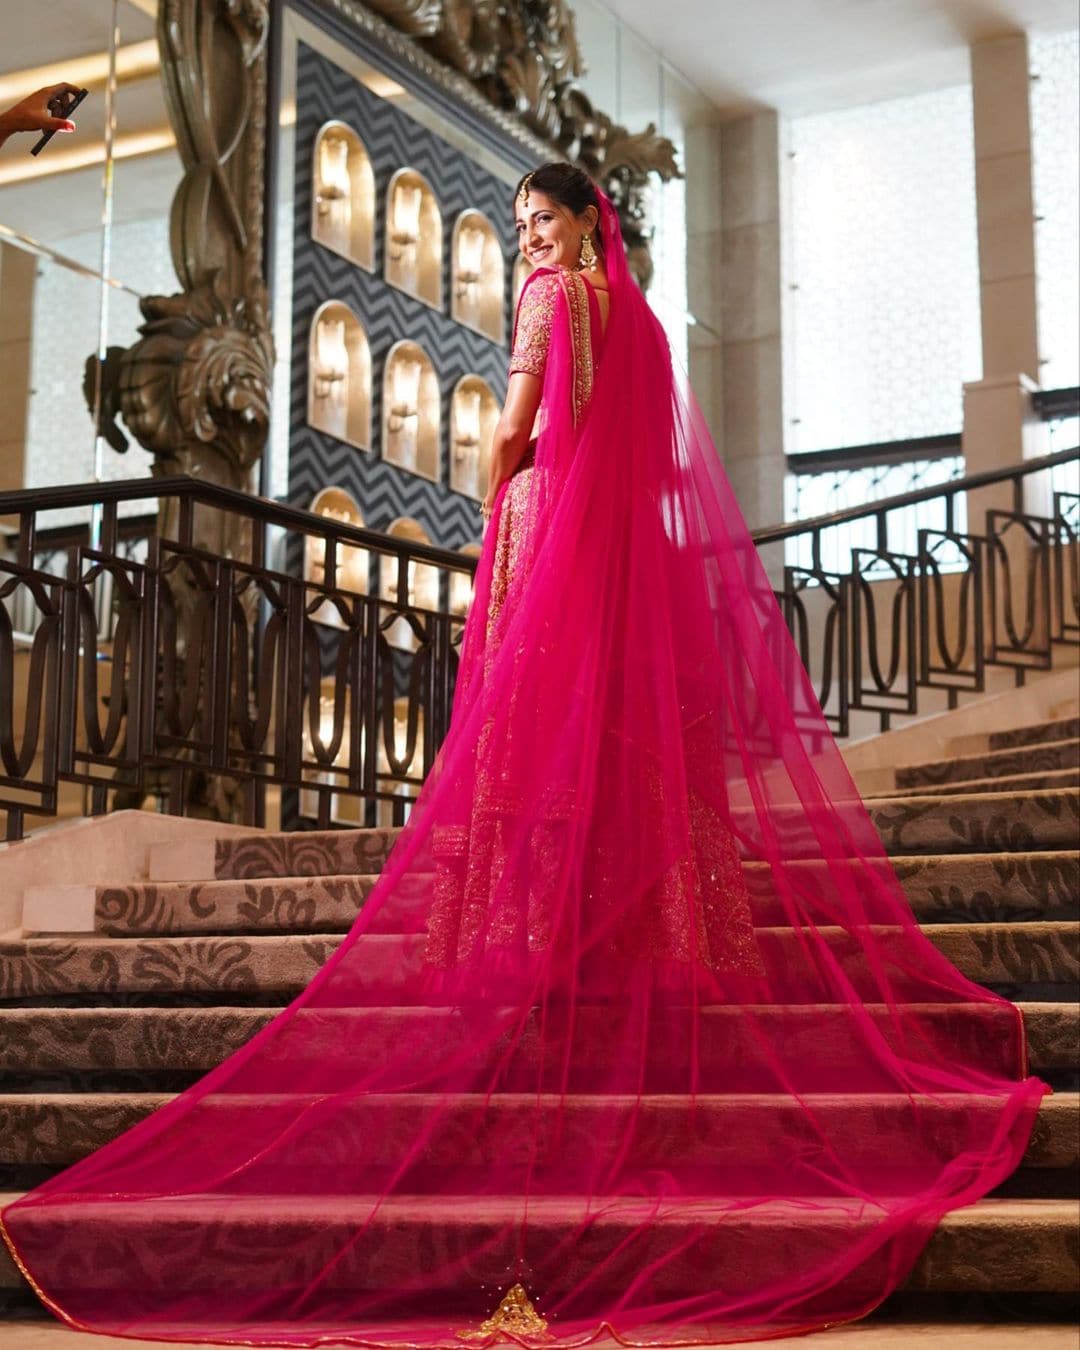 Aahana Kumra looks regal in the bright pink dupatta.